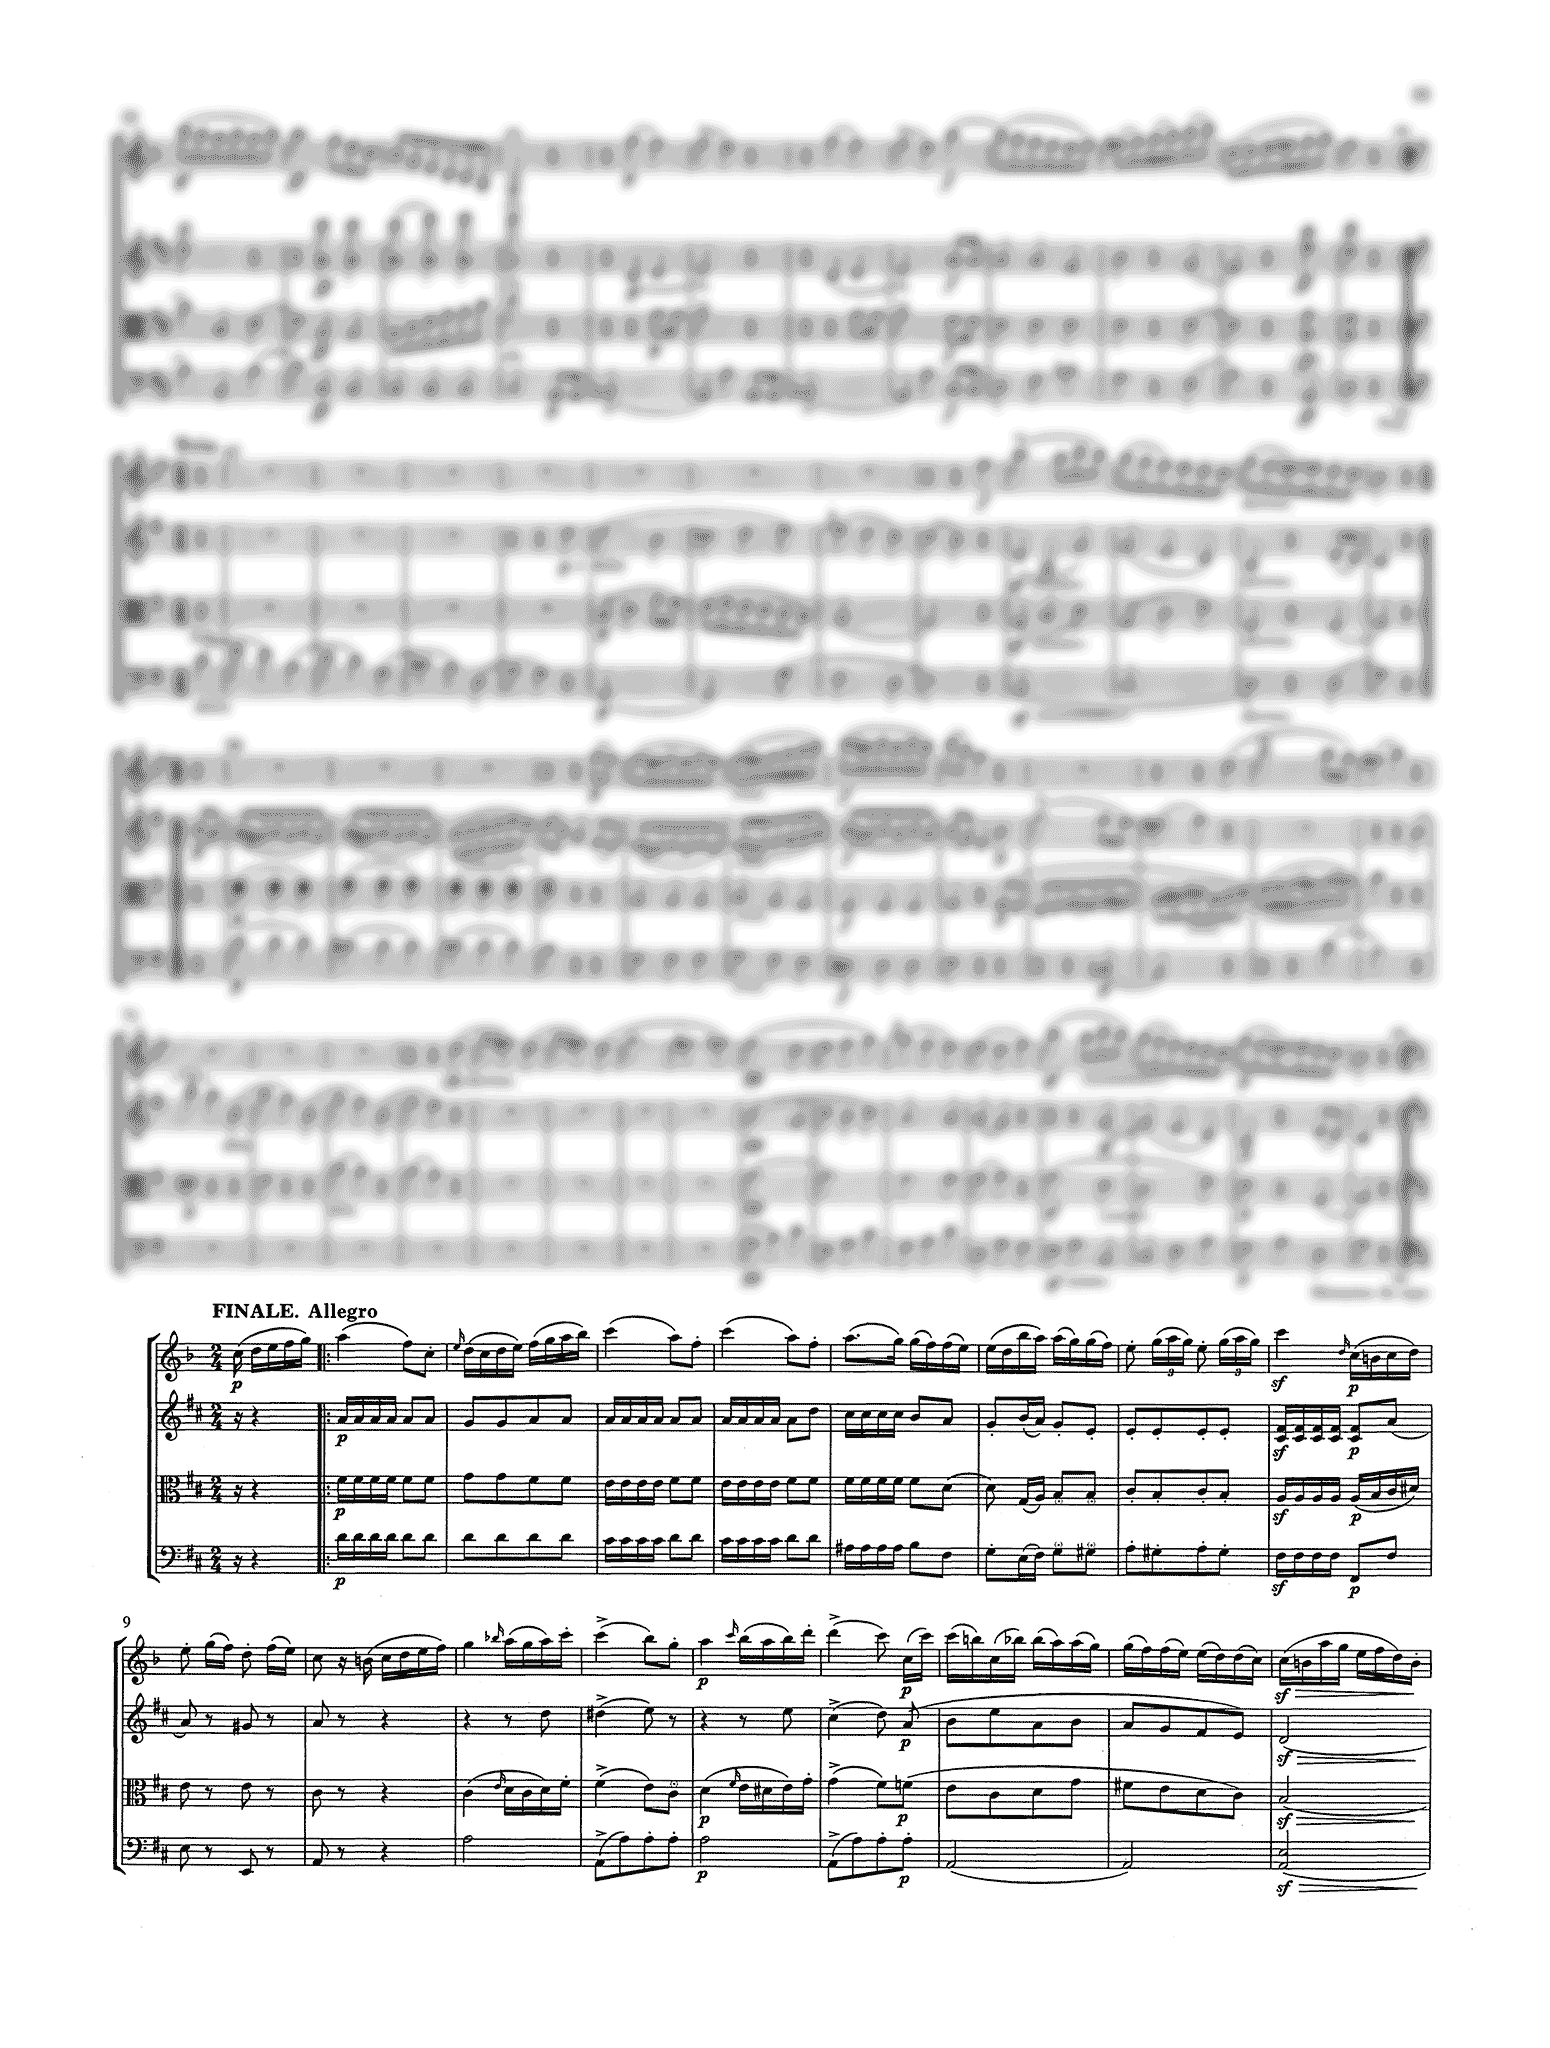 Crusell Clarinet Quartet No. 3 in D Major, Op. 7 - Movement 4